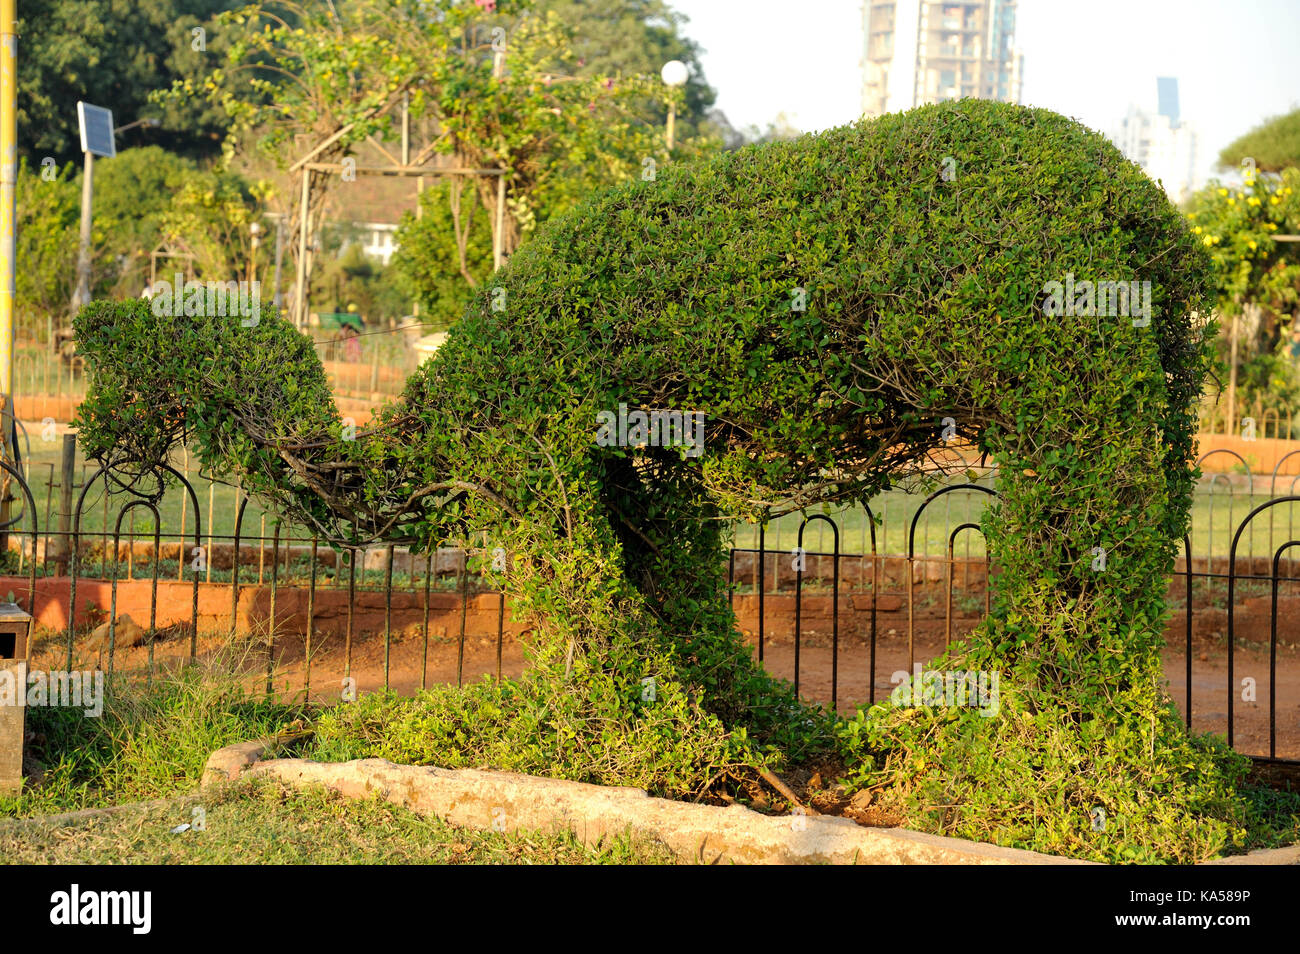 Hedge tagliato nella forma degli animali , giardino pensile malabar hill, Mumbai, Maharashtra, India, Asia - rmm 258745 Foto Stock